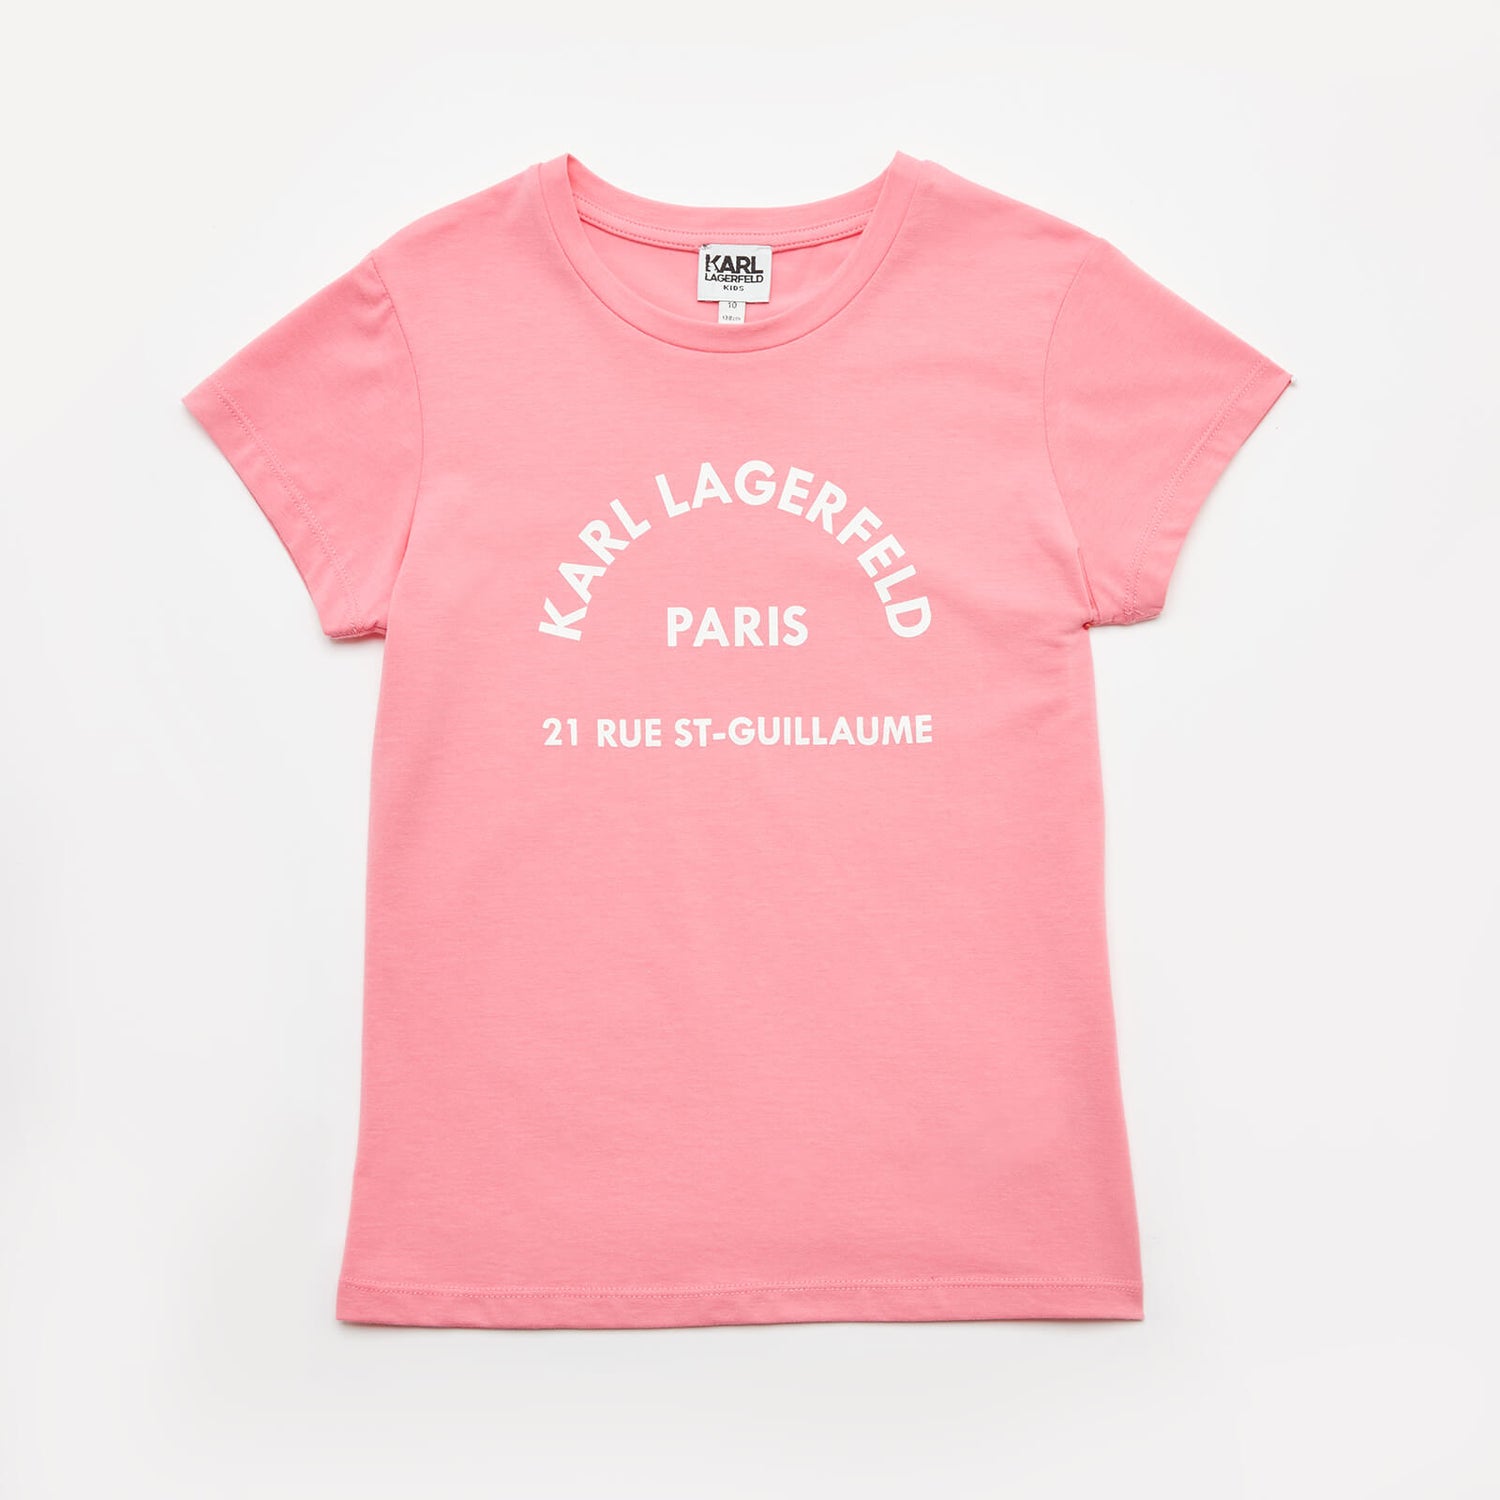 KARL LAGERFELD Girls' Grand Hotel Short Sleeves Tee-Shirt - Pale Pink